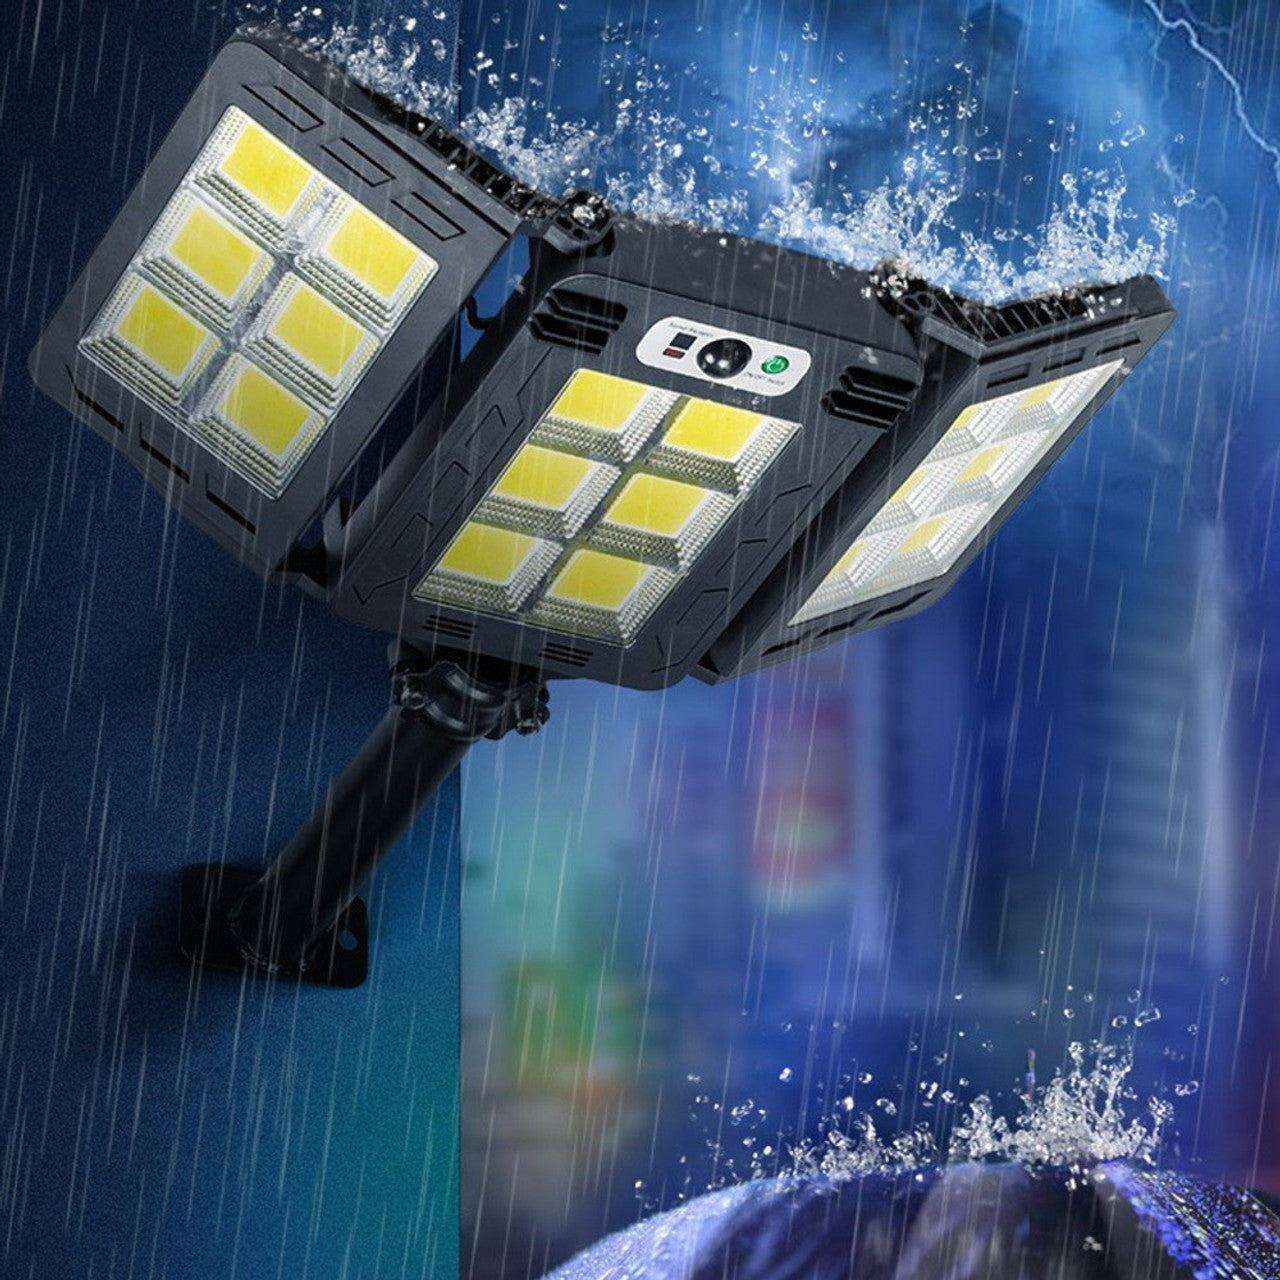 60W 3 Heads Smart Sensor Outdoor Solar Flood Light EL-7860-A